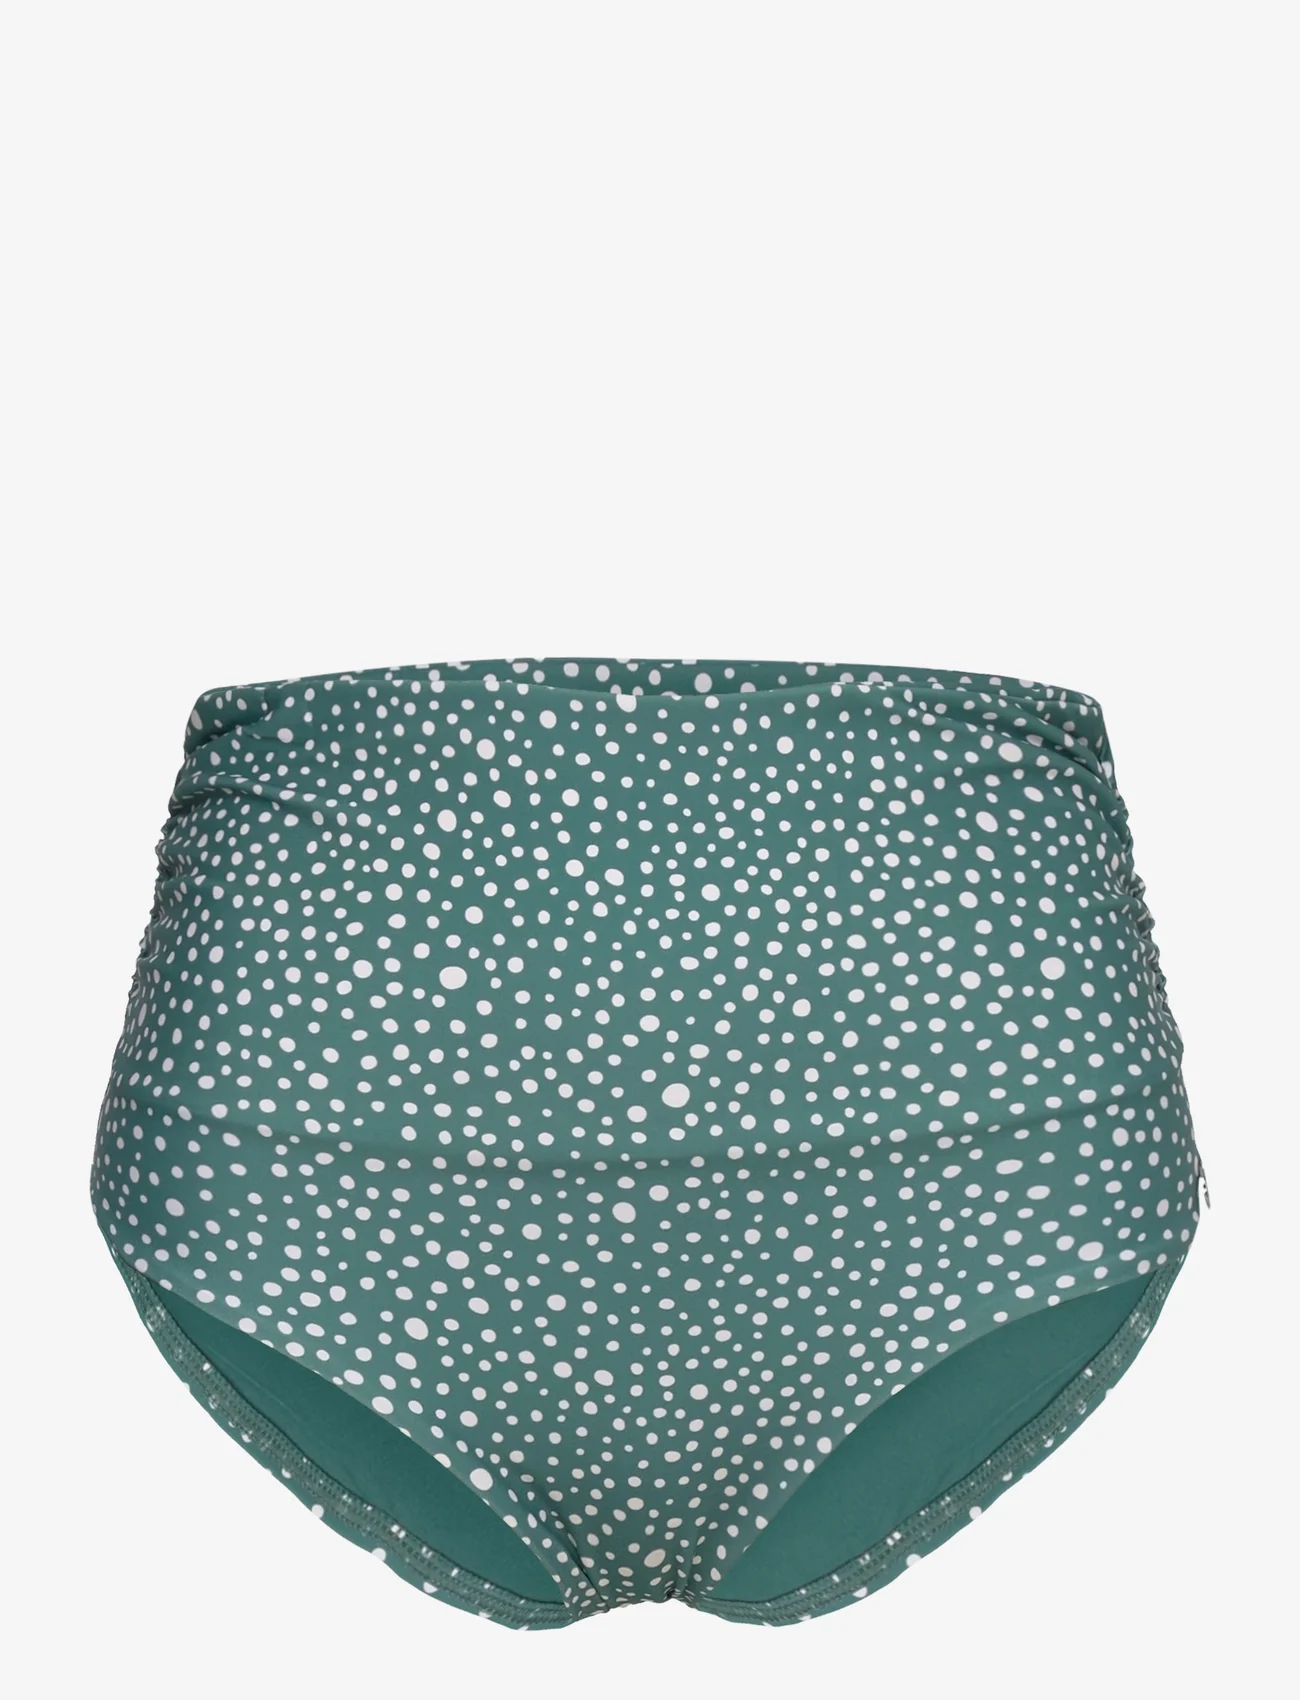 Panos Emporio - Ditsy Dots Chara Bottom - bikinibroekjes met hoge taille - deep jungle - 0